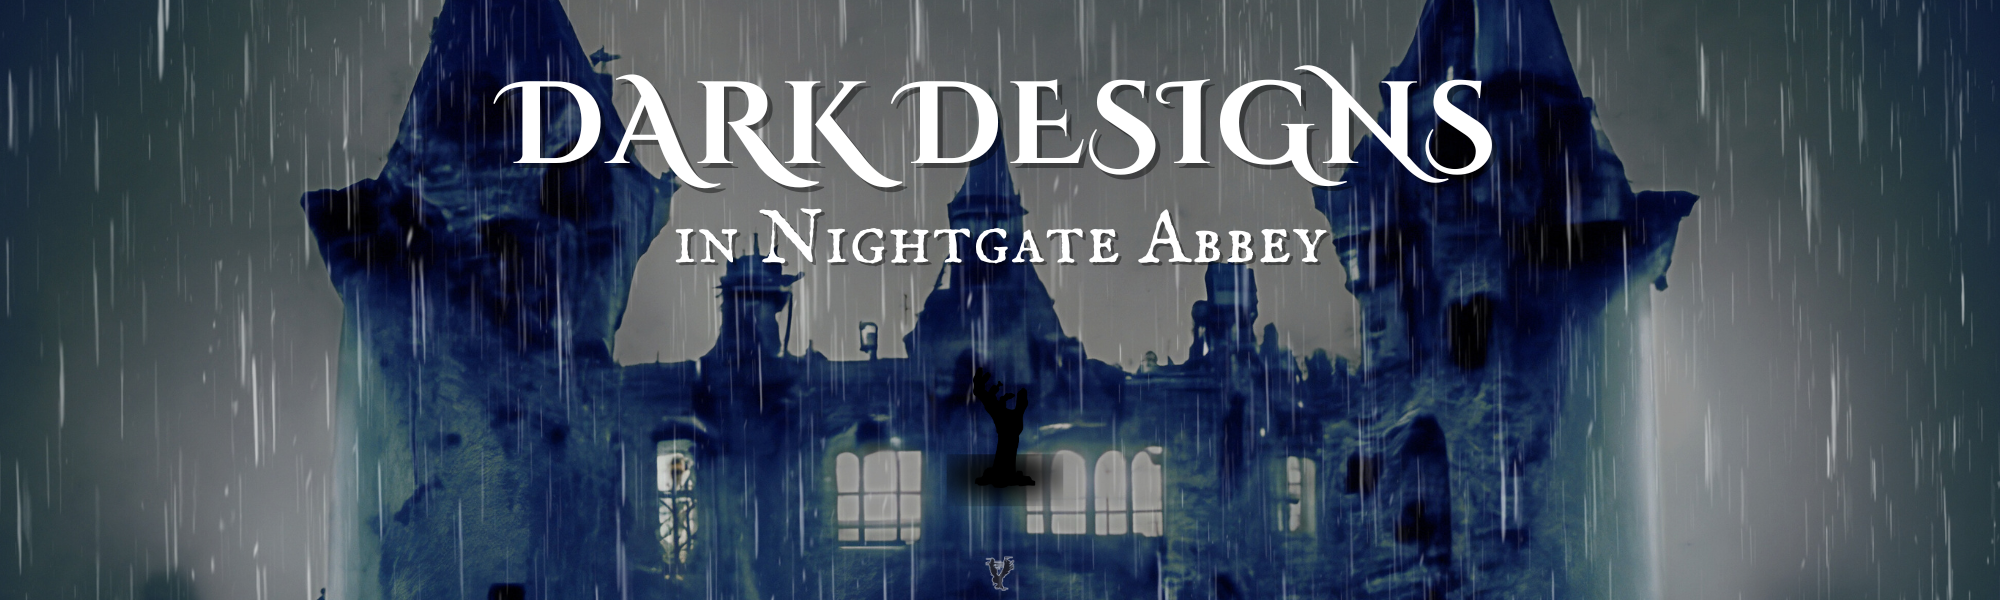 Dark Designs in Nightgate Abbey